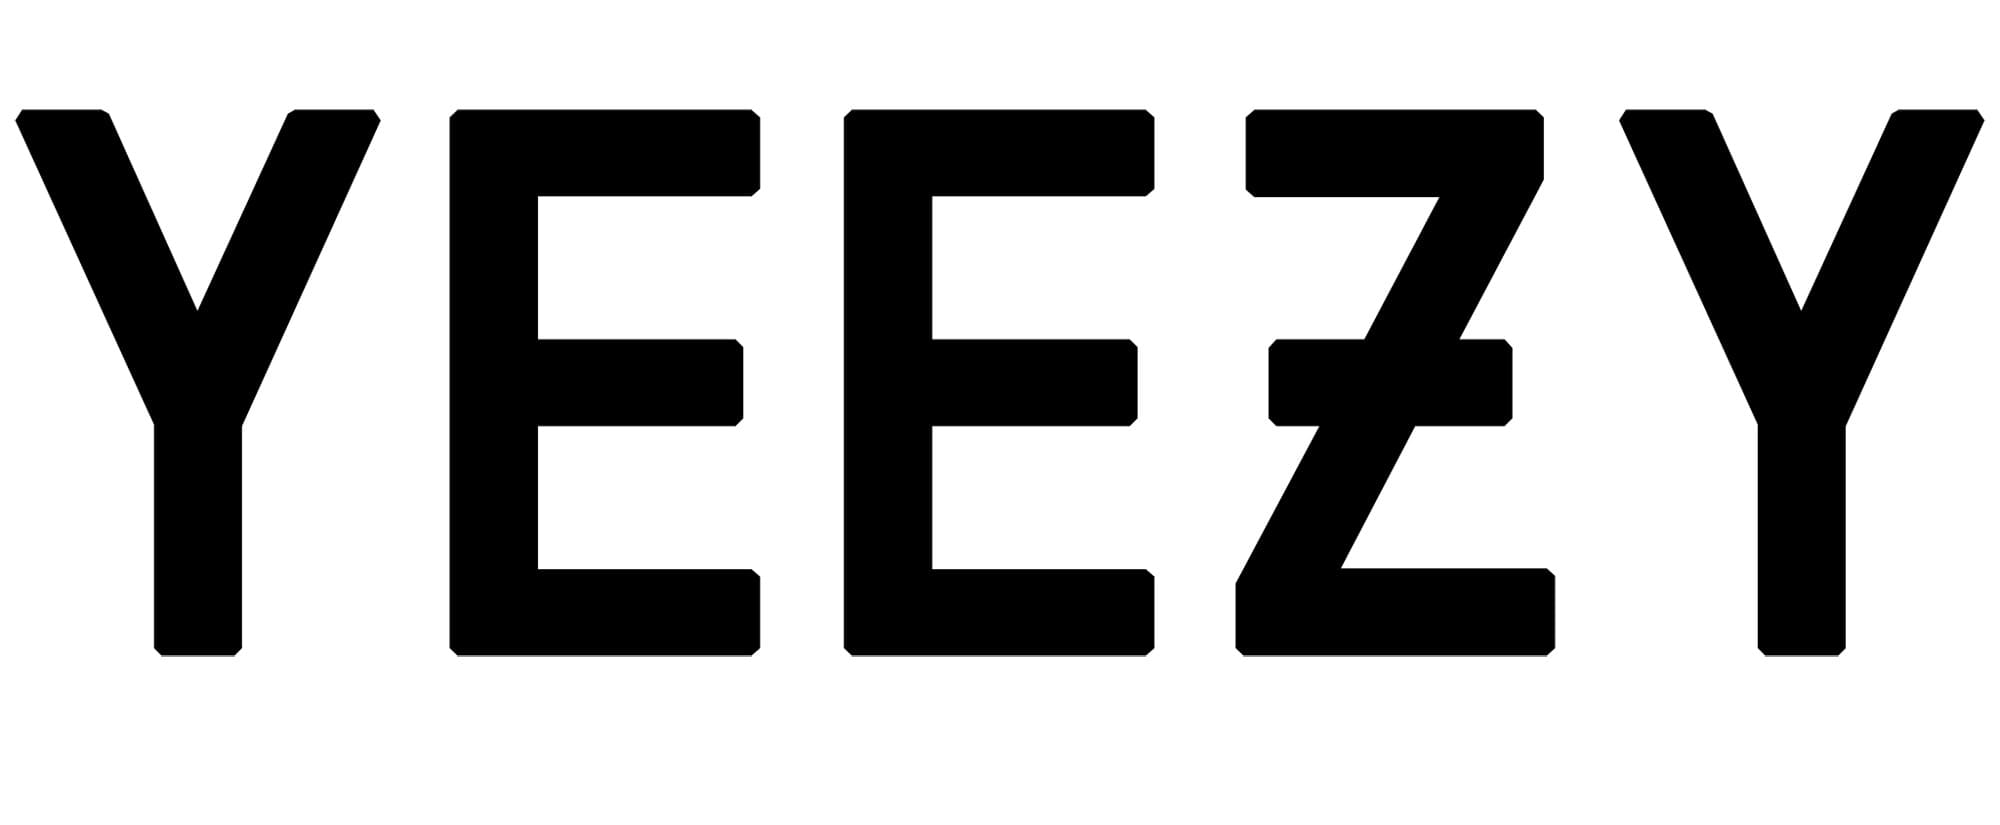 adidas yeezy logo